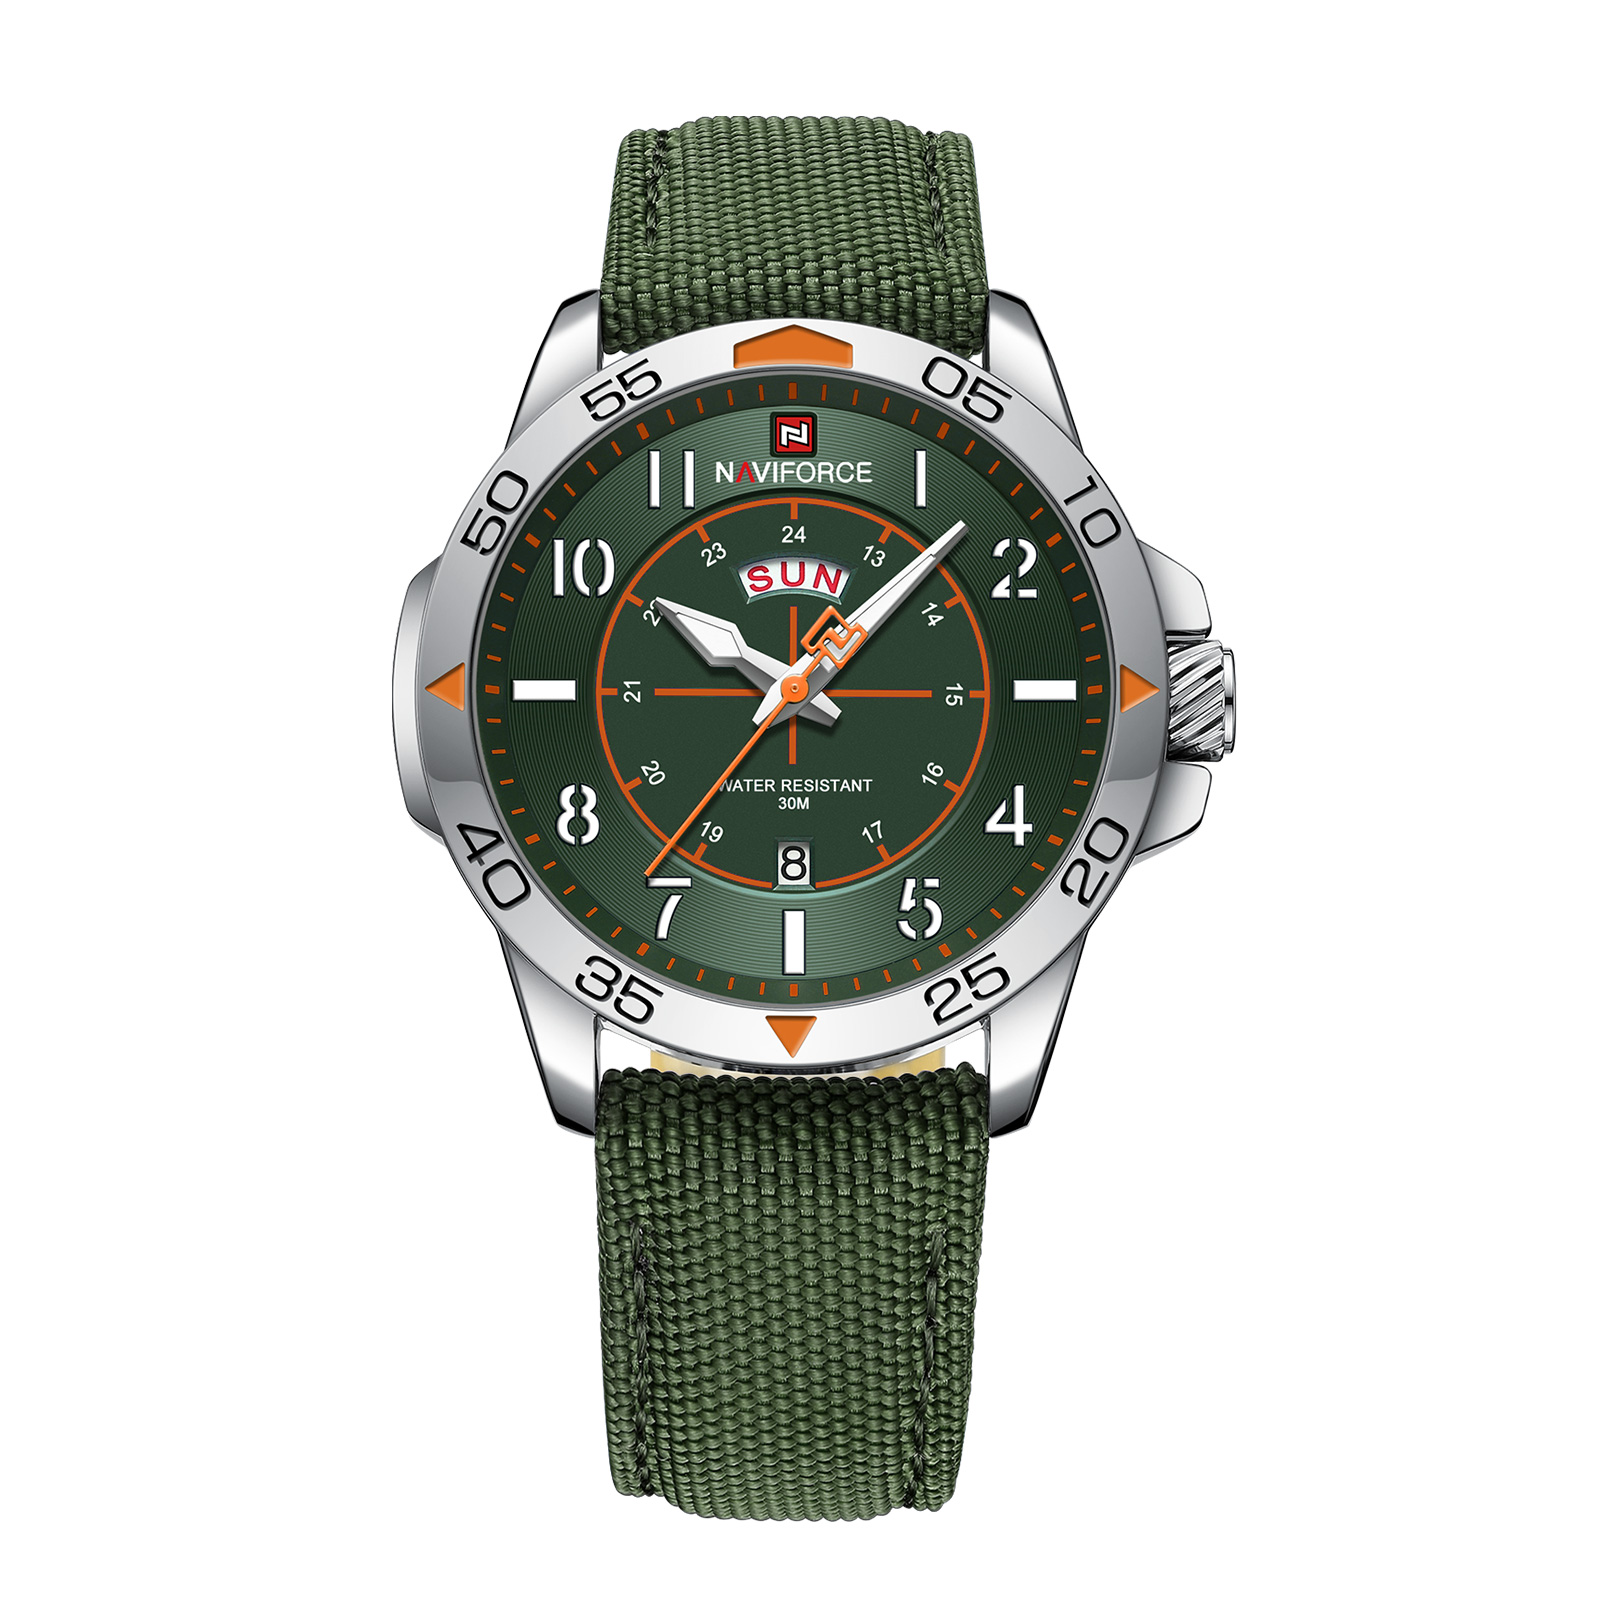 NAVIFORCE 8025 Quartz Watches with Square Case Chronograph Sport Wrist Watch for men